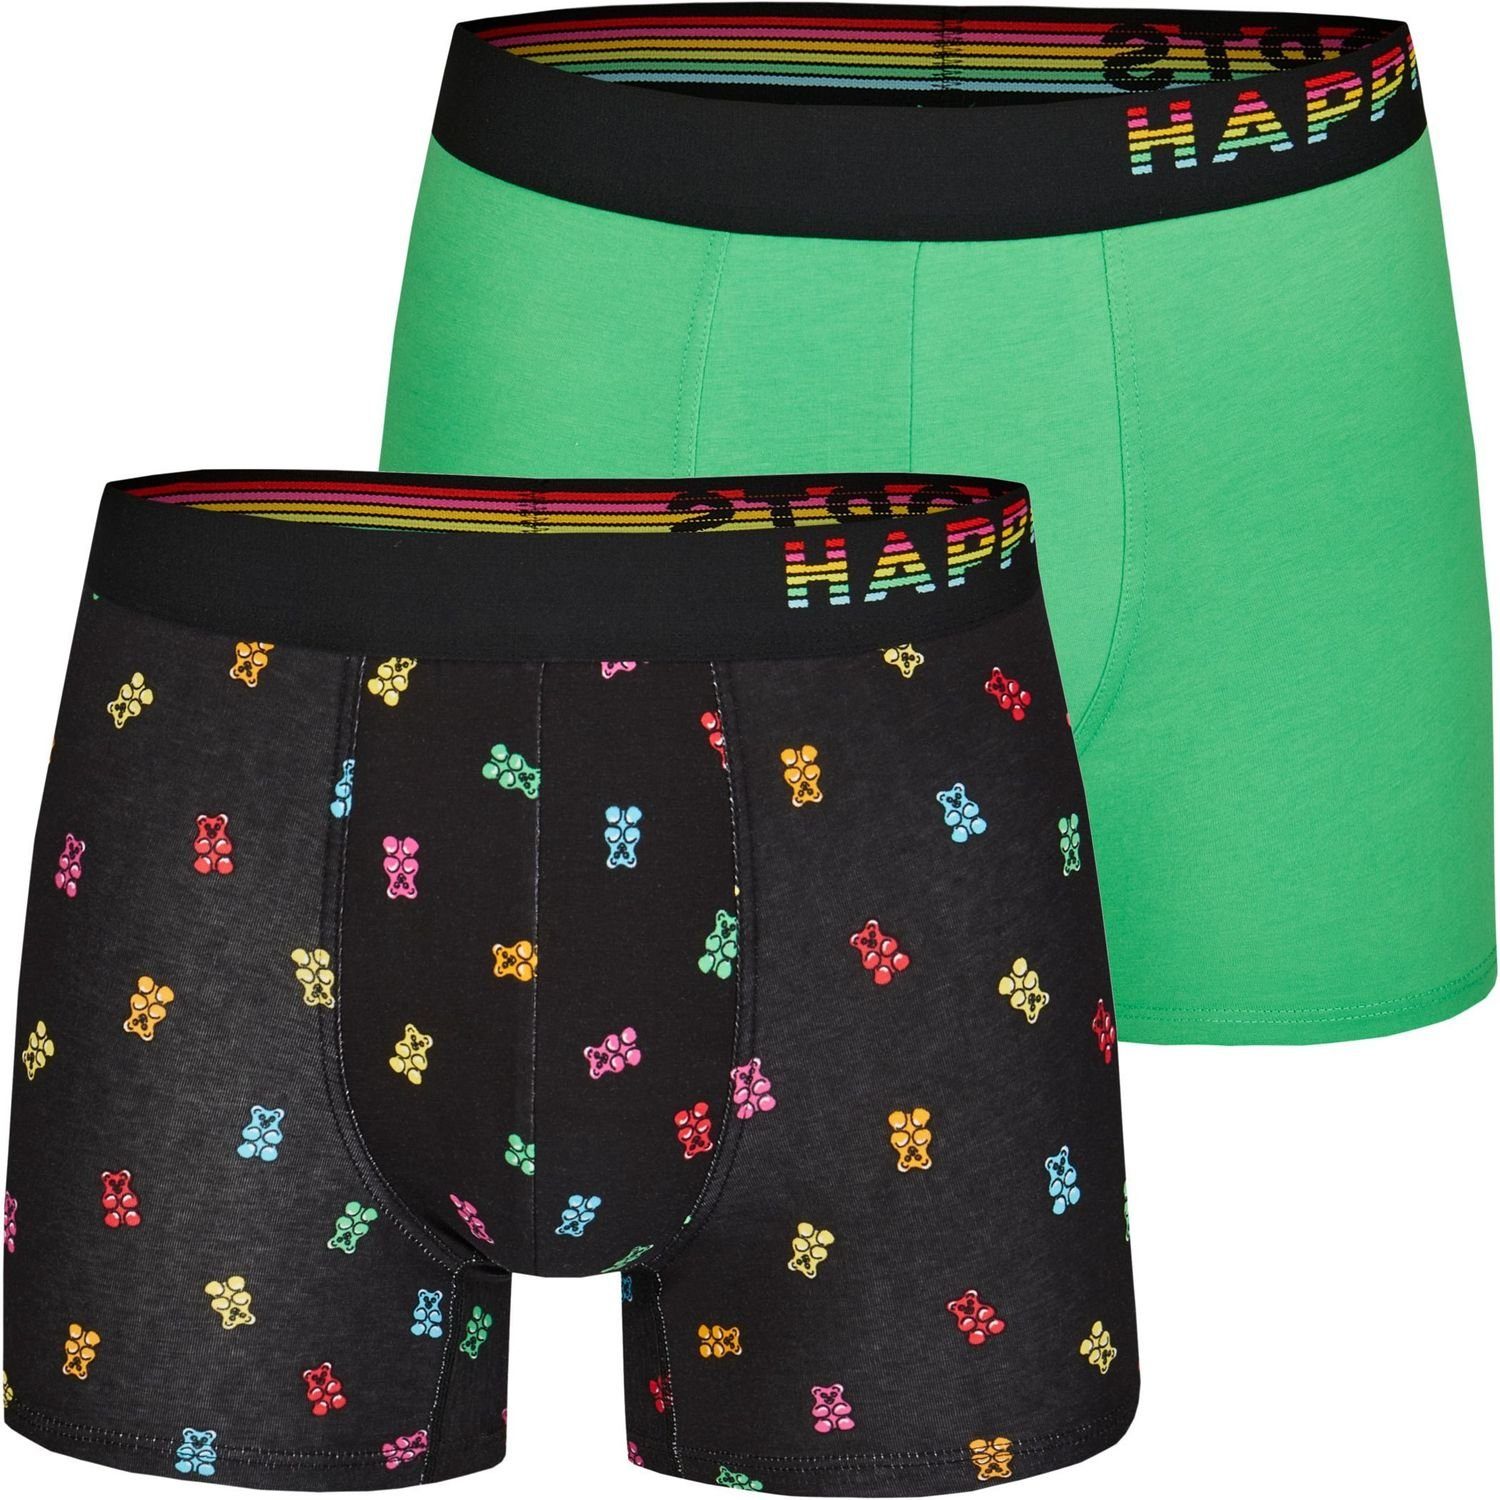 HAPPY SHORTS Trunk »2 Happy Shorts Pants Jersey Trunk Herren Boxershorts  marine grau Croissant« (1 Stück) online kaufen | OTTO